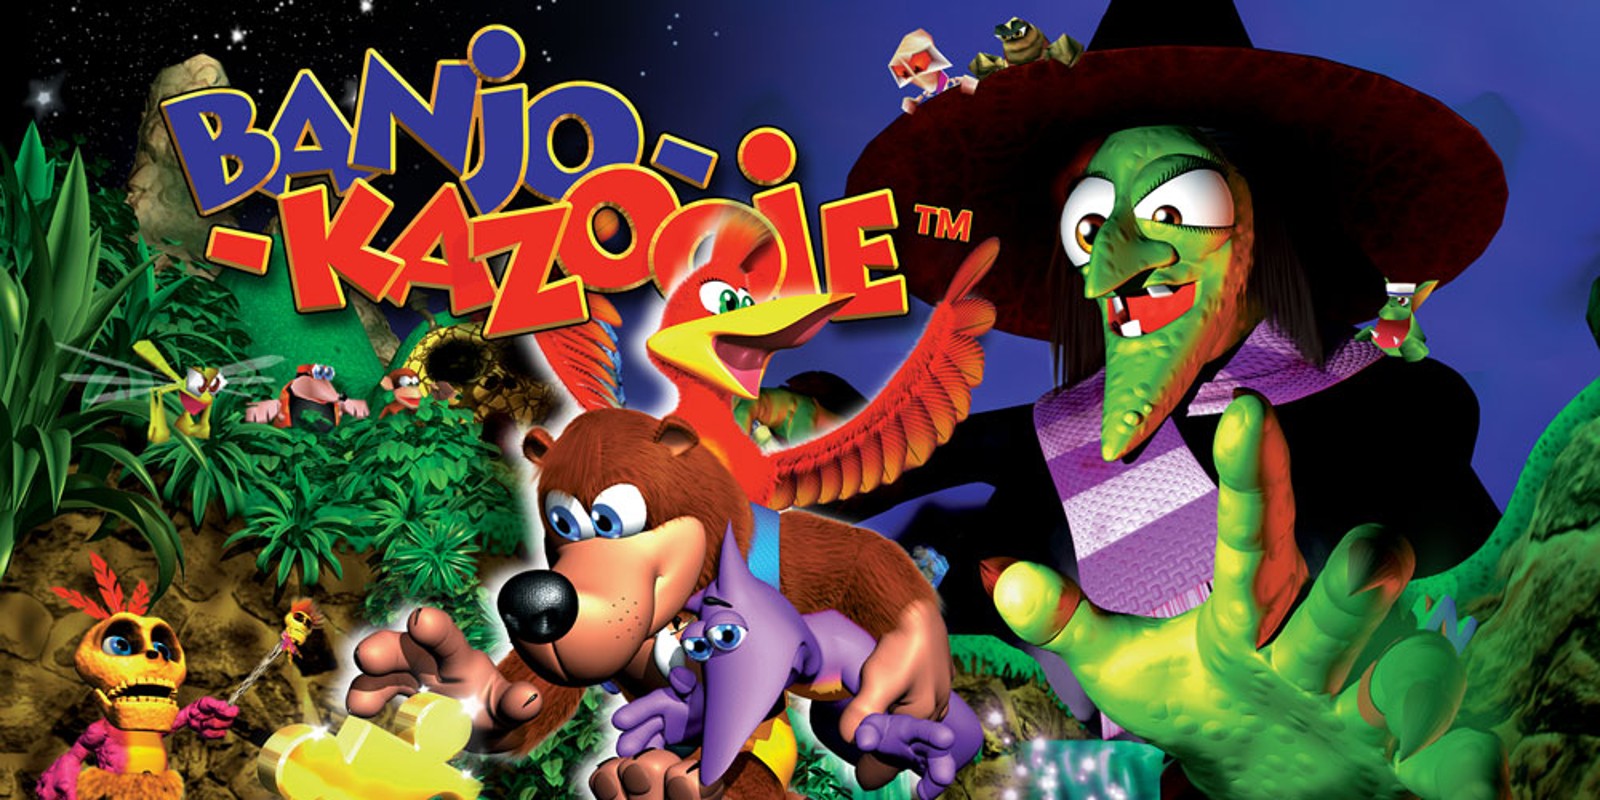 Banjo-Kazooie, Nintendo 64, Games